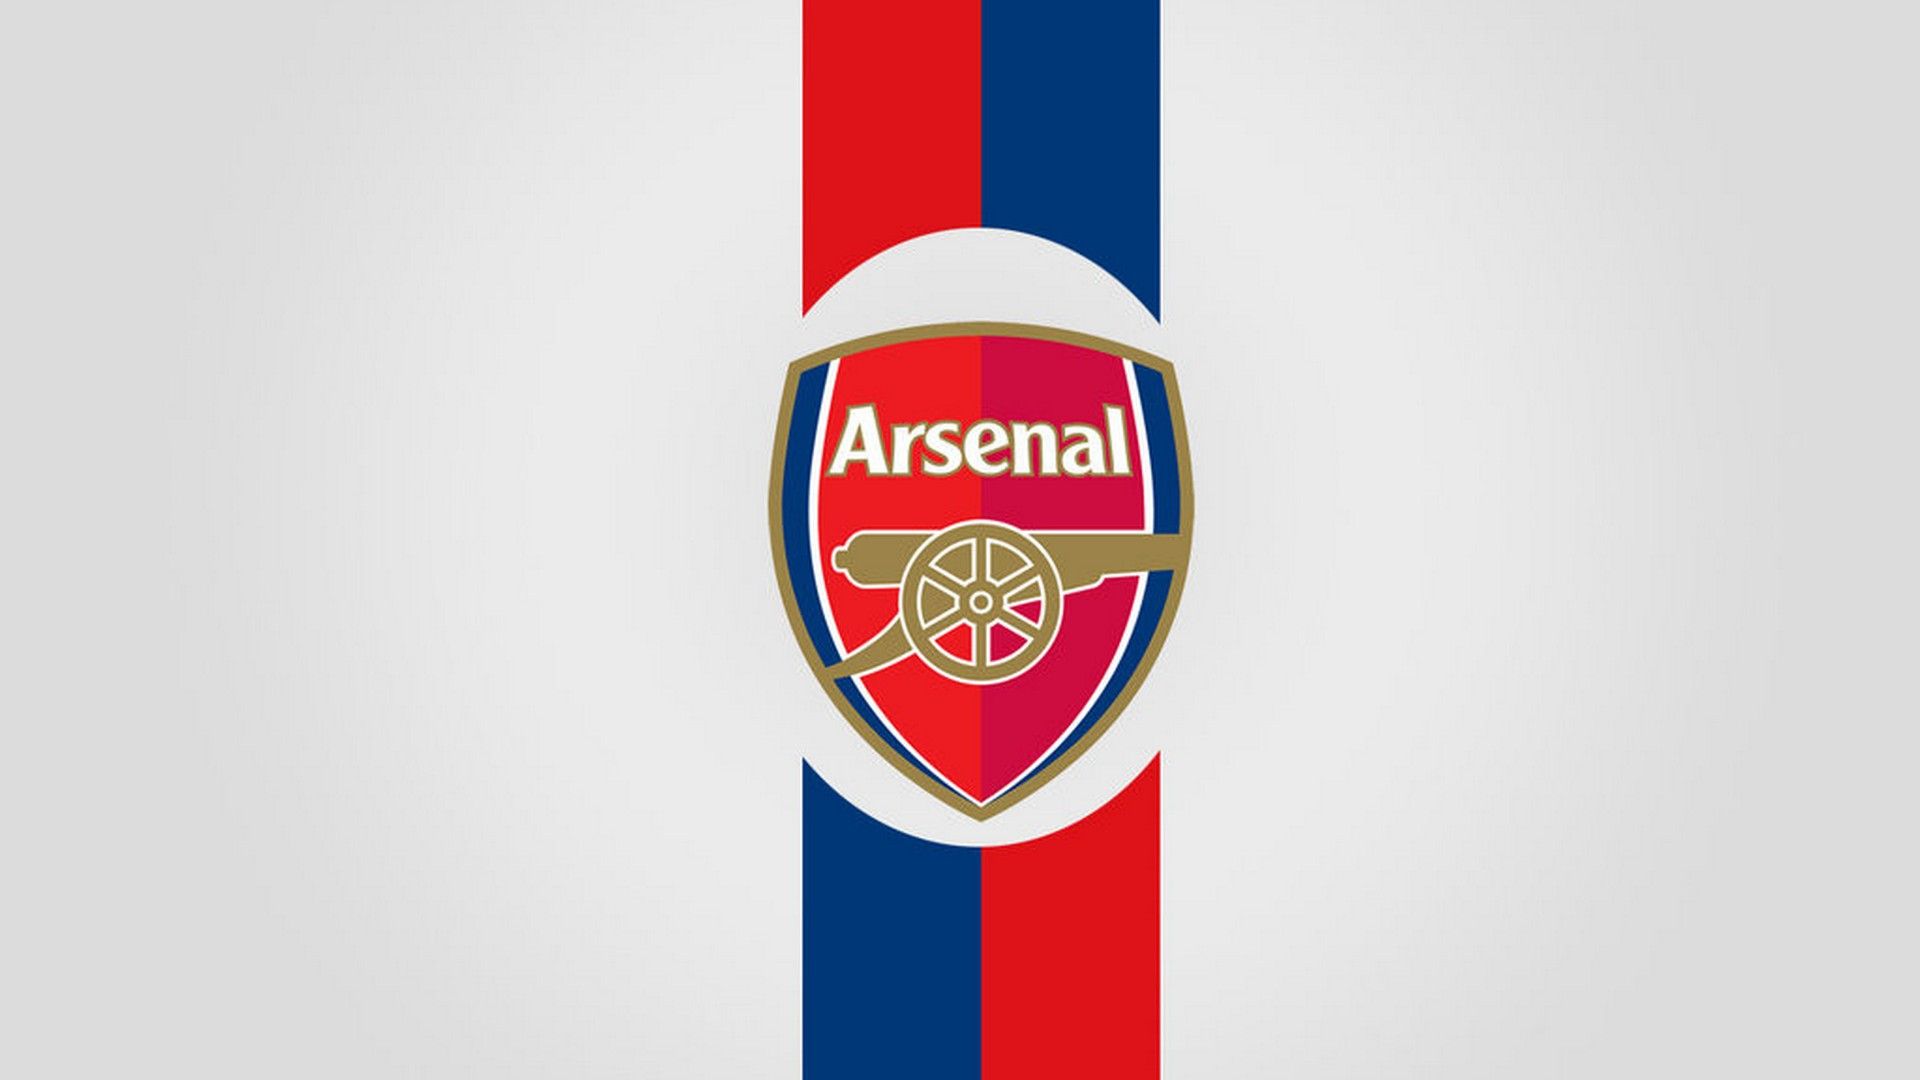 HD Background Arsenal Football Wallpaper. Arsenal wallpaper, Football wallpaper, Arsenal